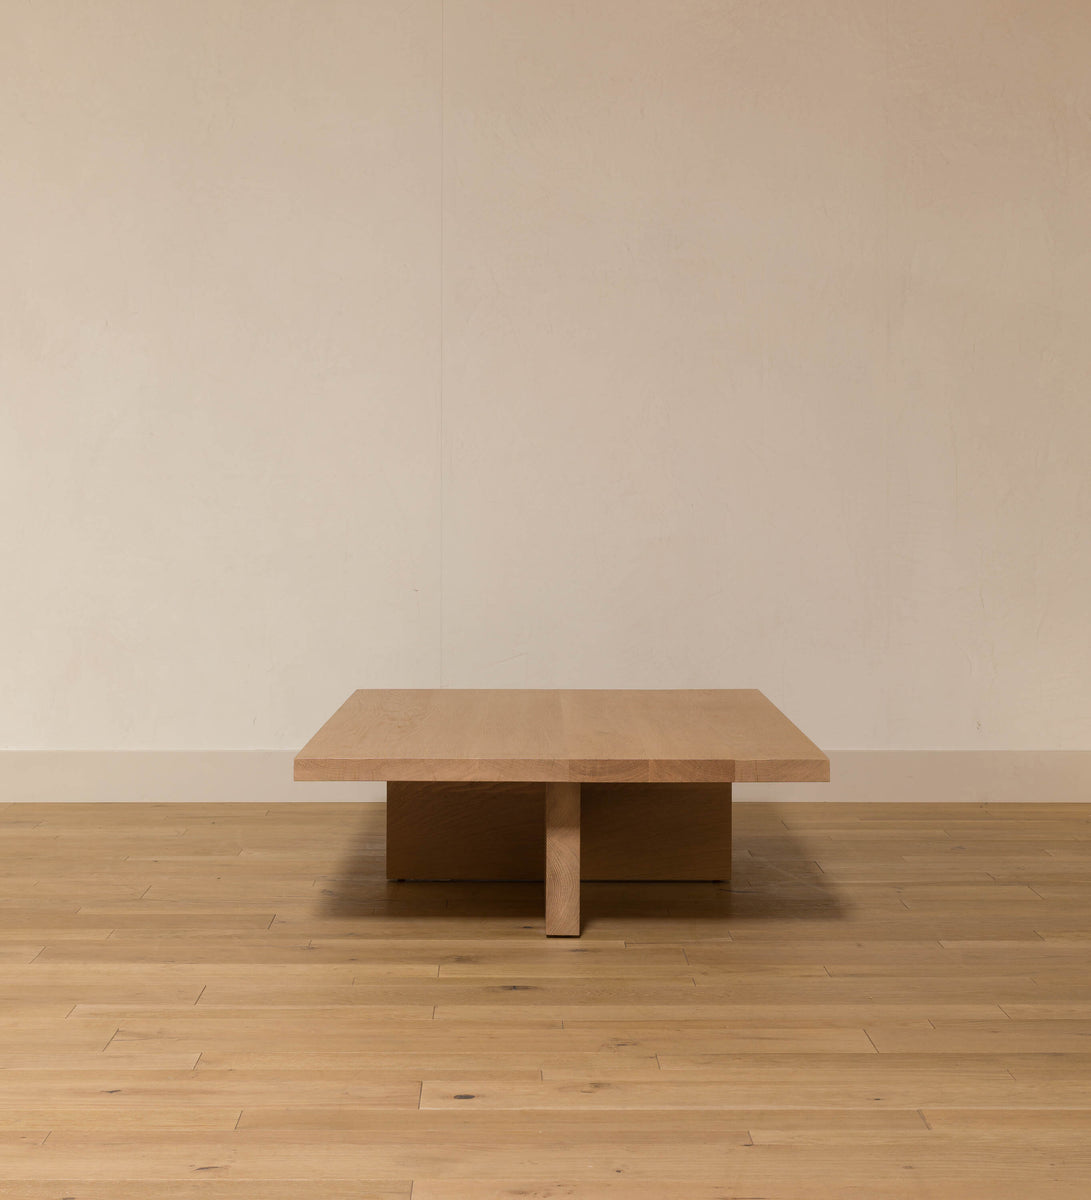 George Rectangular Coffee Table | Shoppe Amber Interiors